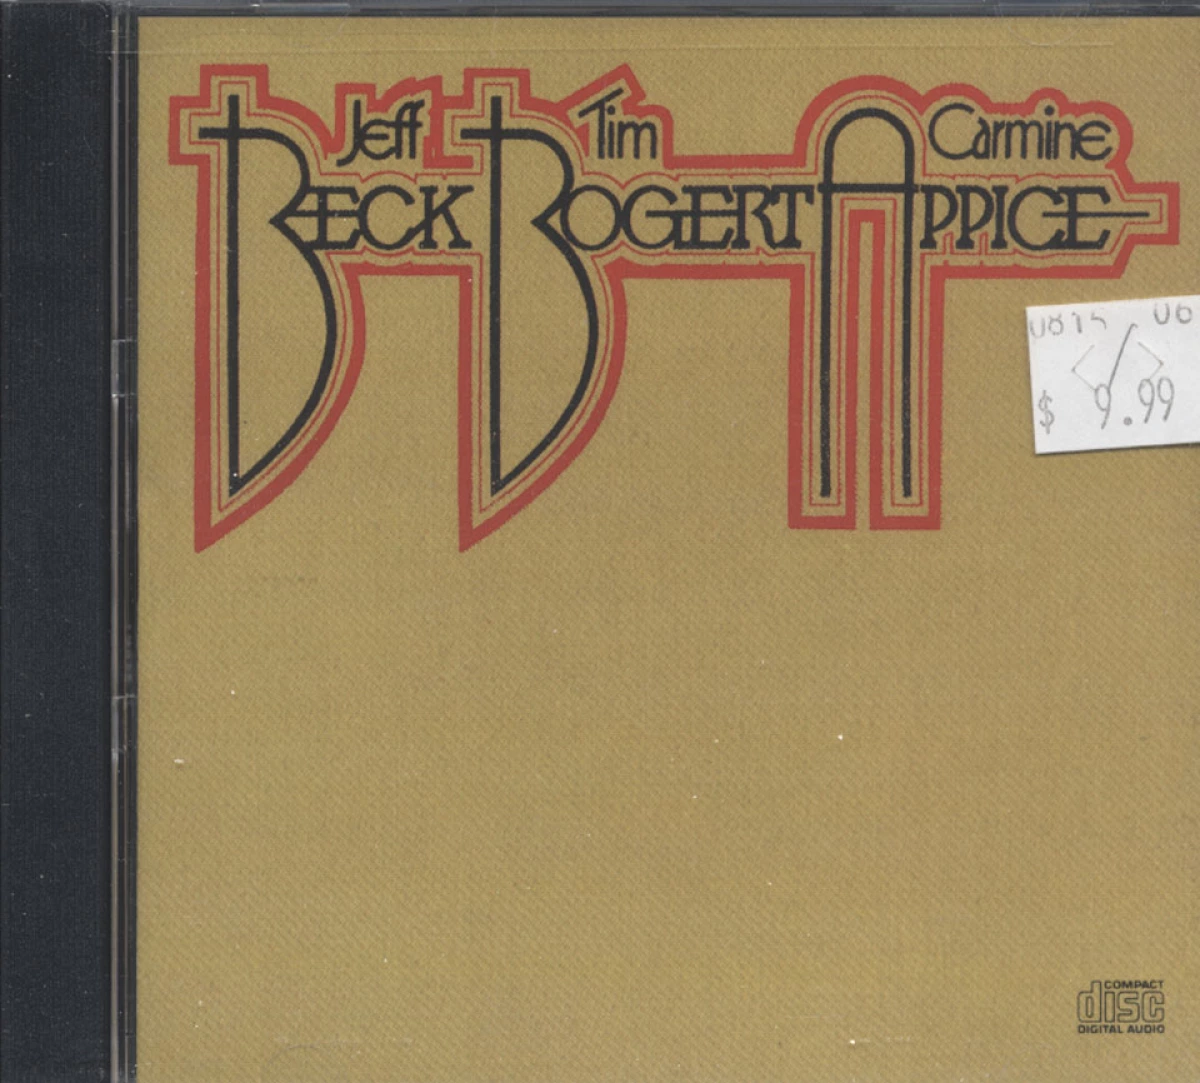 Jeff Beck / Tim Bogert / Carmine Appice CD at Wolfgang's